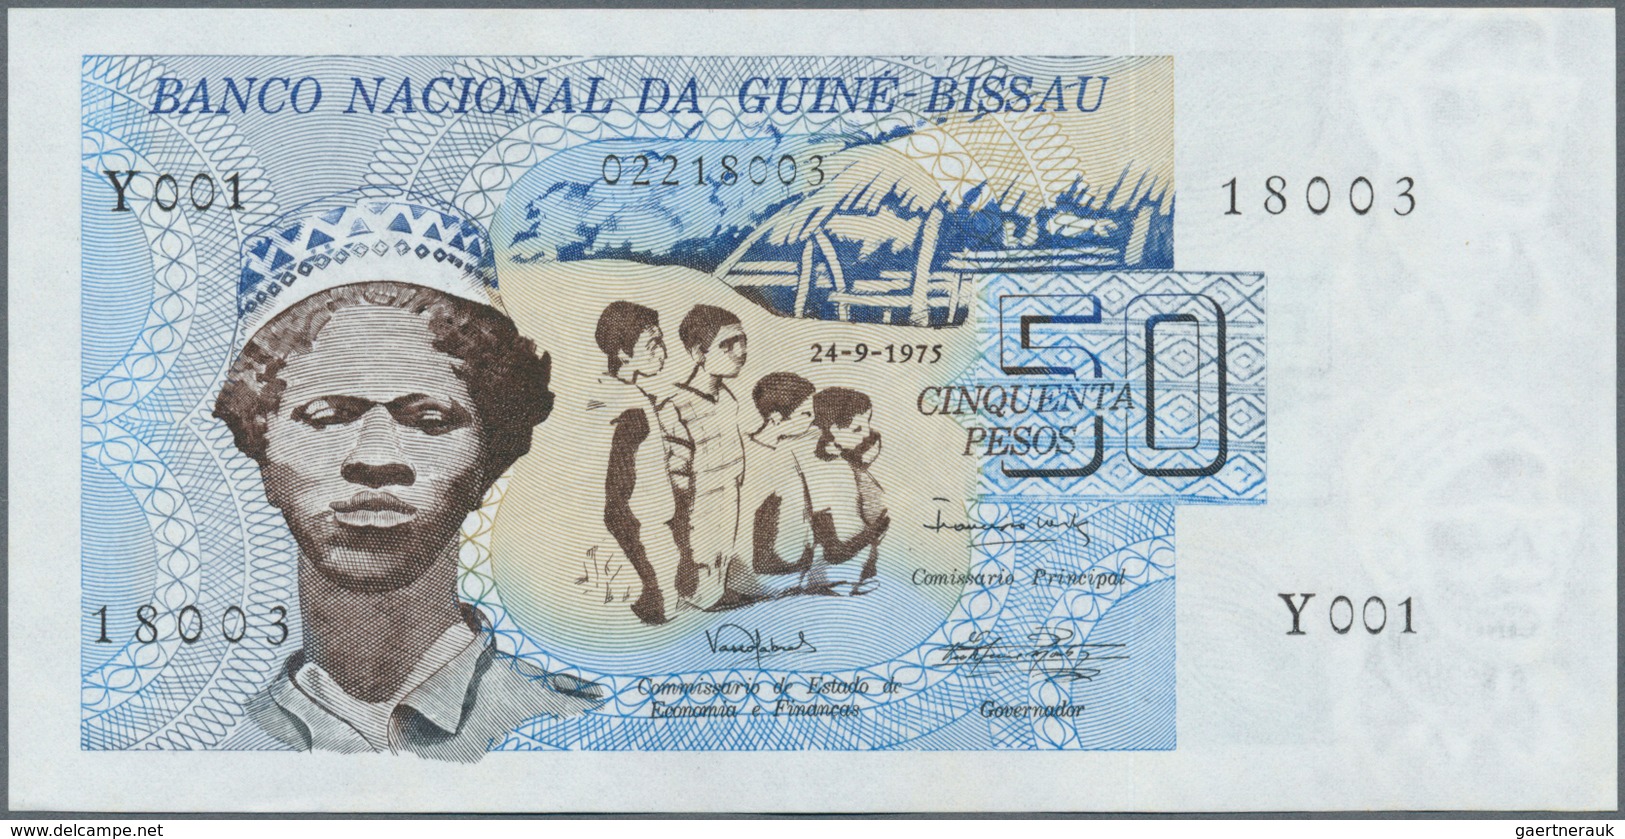 Guinea Bissau: Set Of 2 Notes Containing 50 & 100 Pesos 1975 P. 1, 2, Both Crisp Original Without An - Guinee-Bissau